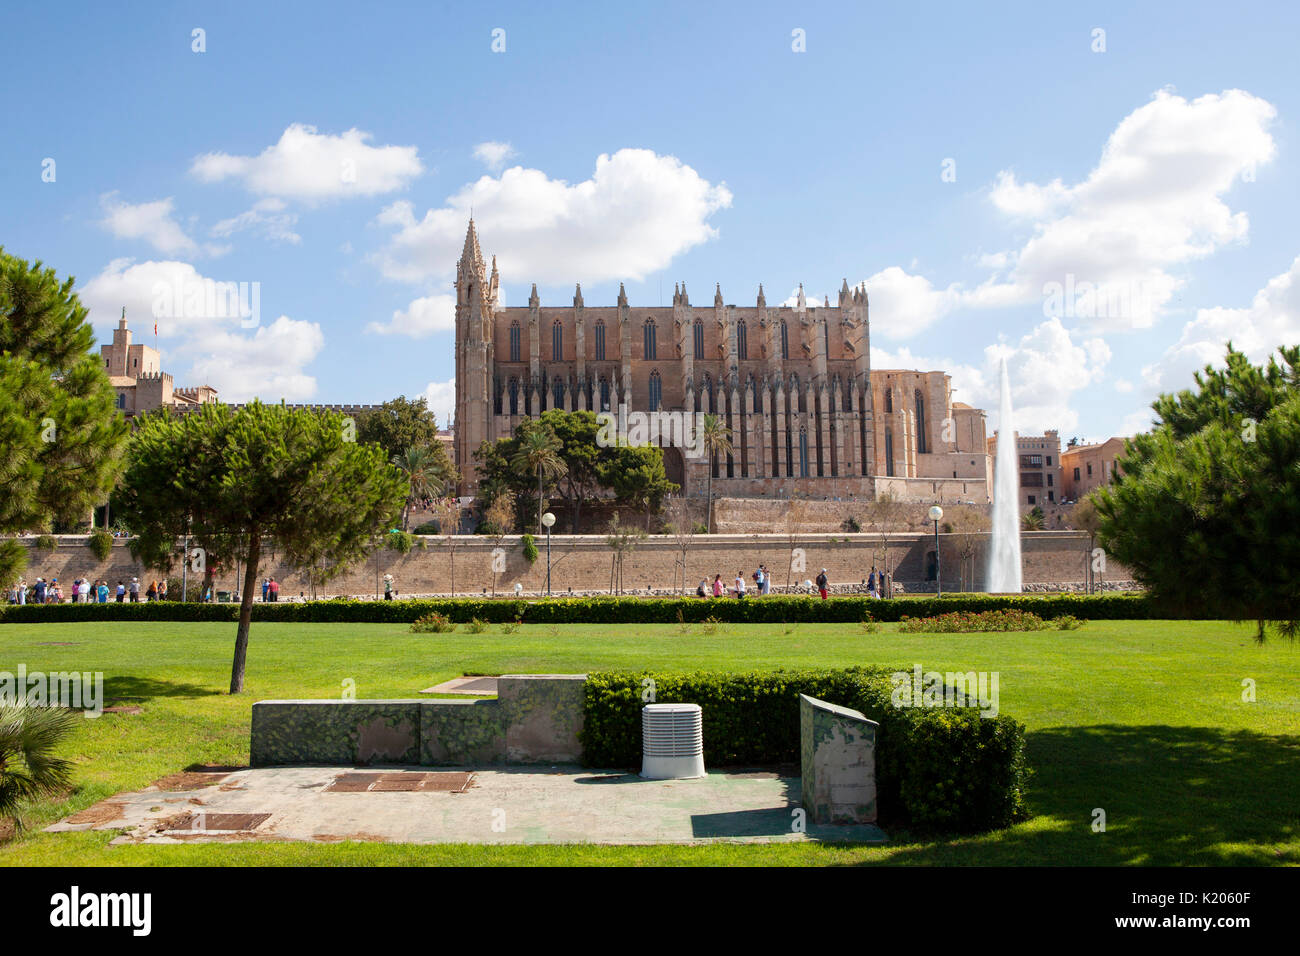 Palma Cathedral of Santa Maria, Palma de Mallorca resort city capital of the Spanish island of Mallorca (Majorca), in the western Mediterranean Stock Photo